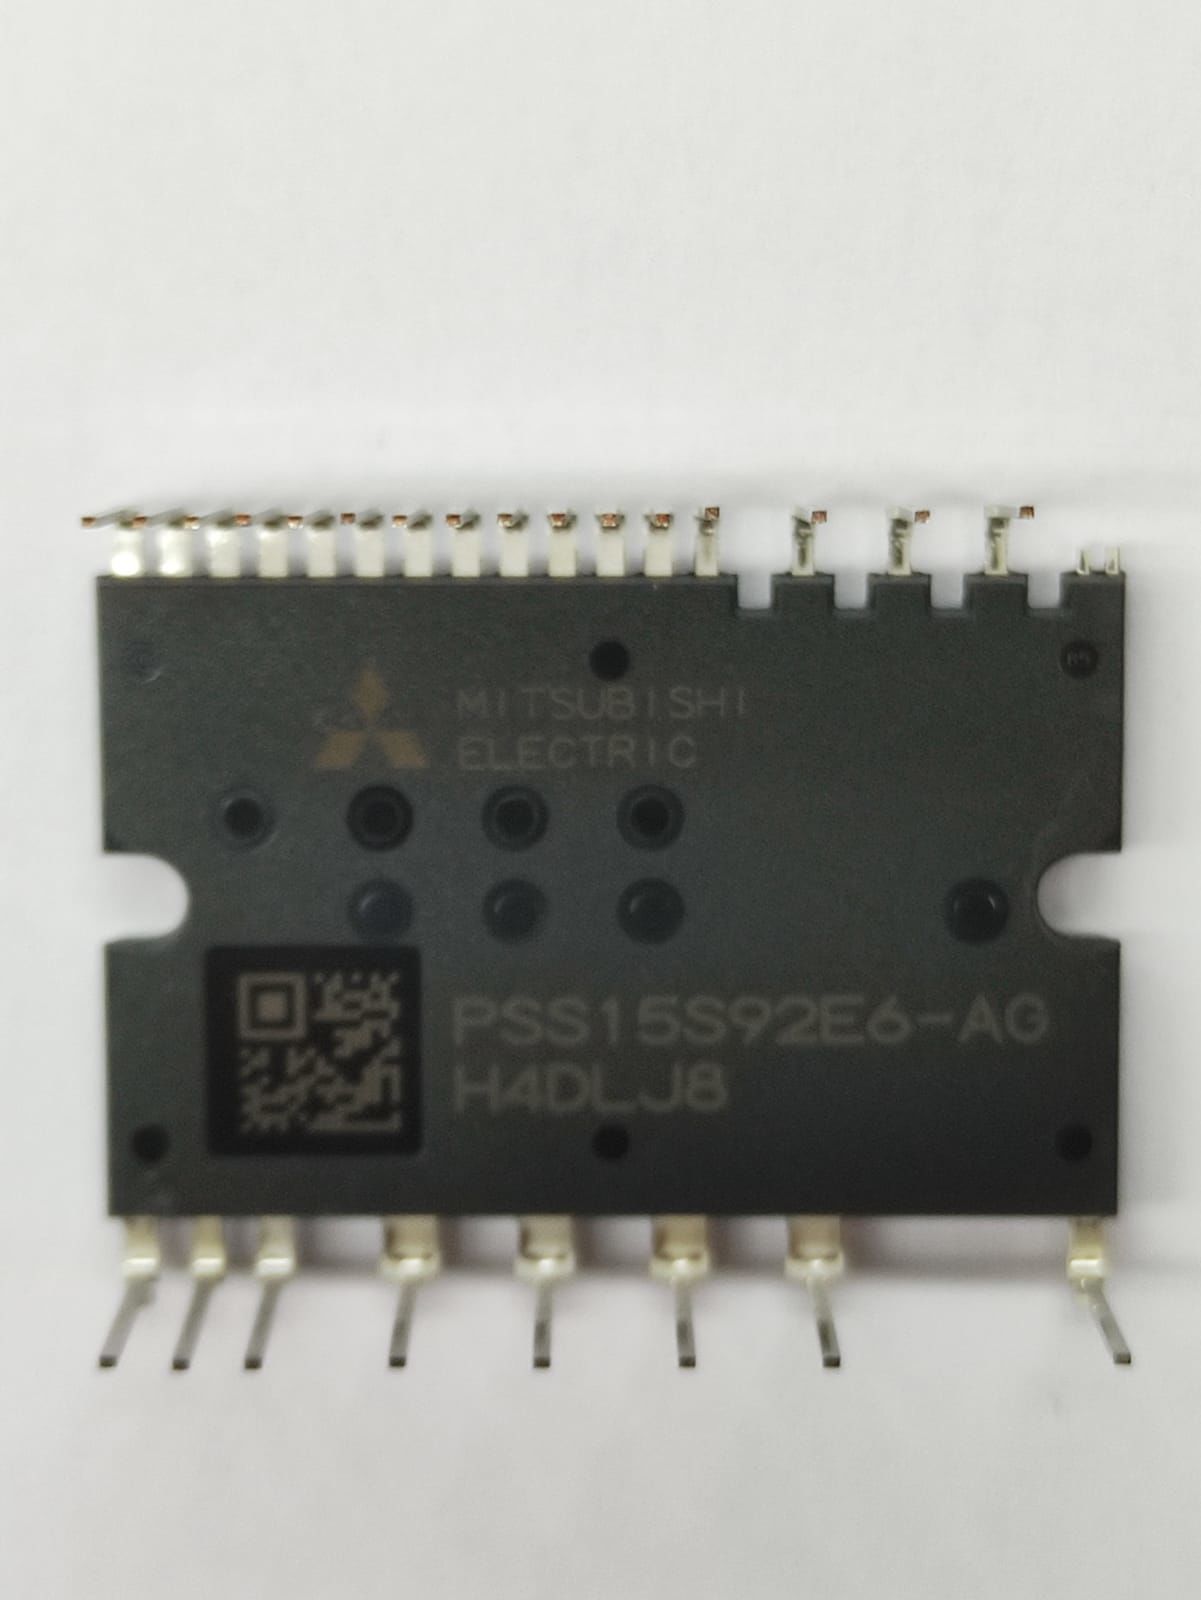 PSS15S92E6-AG   15A 600V   IGBT MODULE